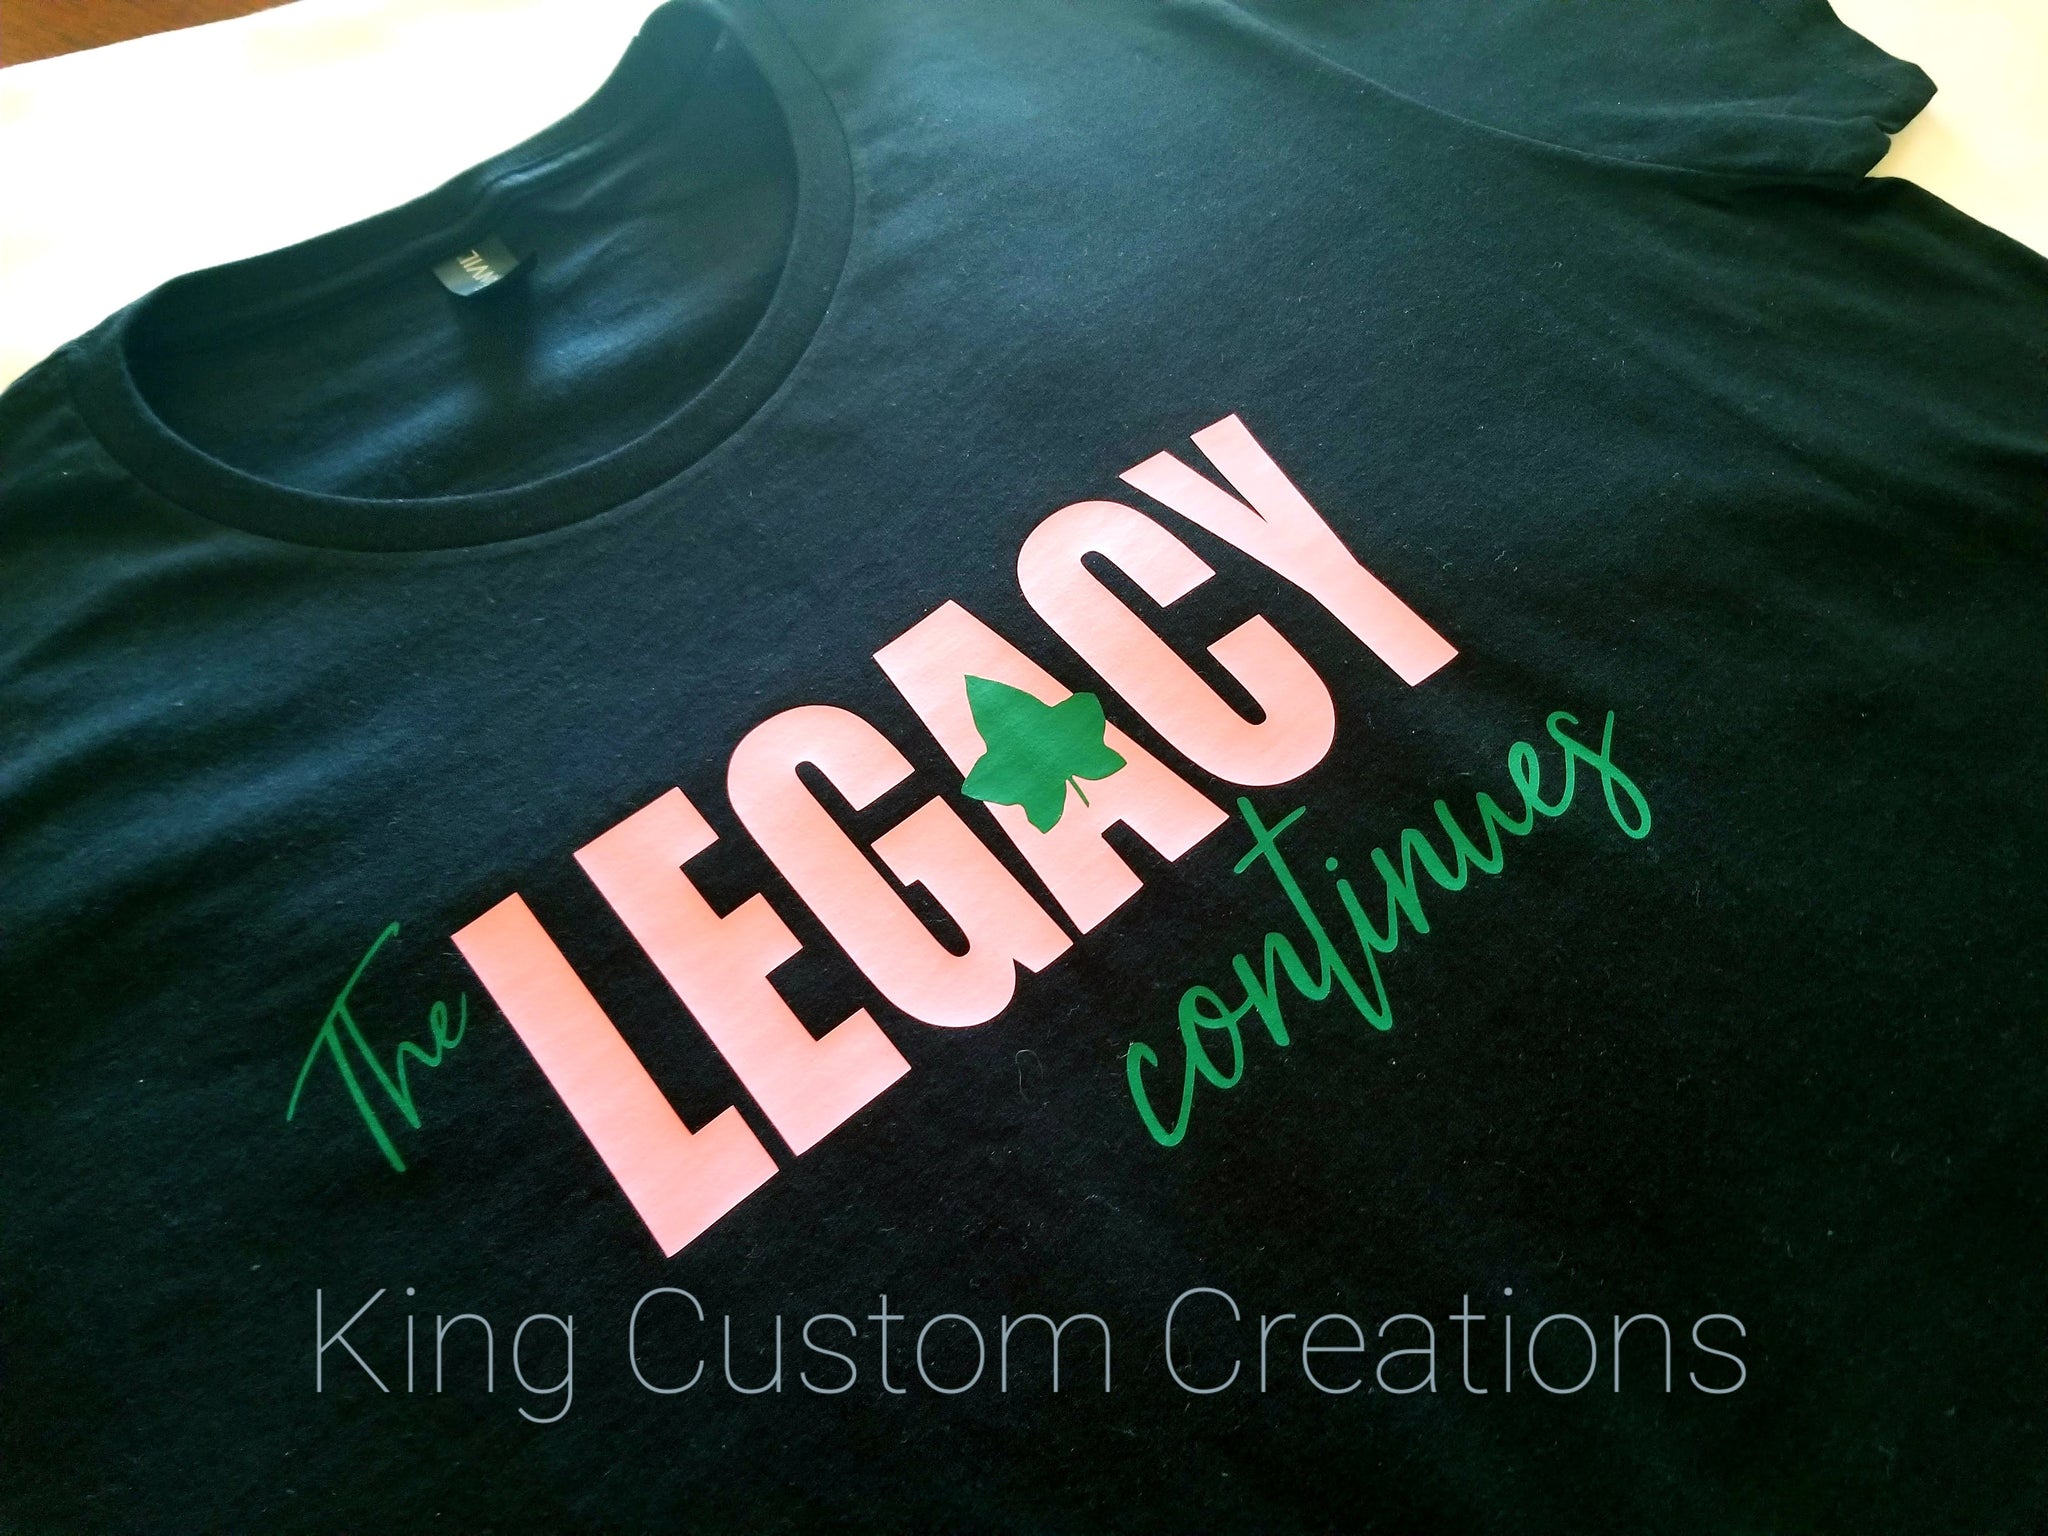 Greek - AKA " The Legacy Continues" T-shirt